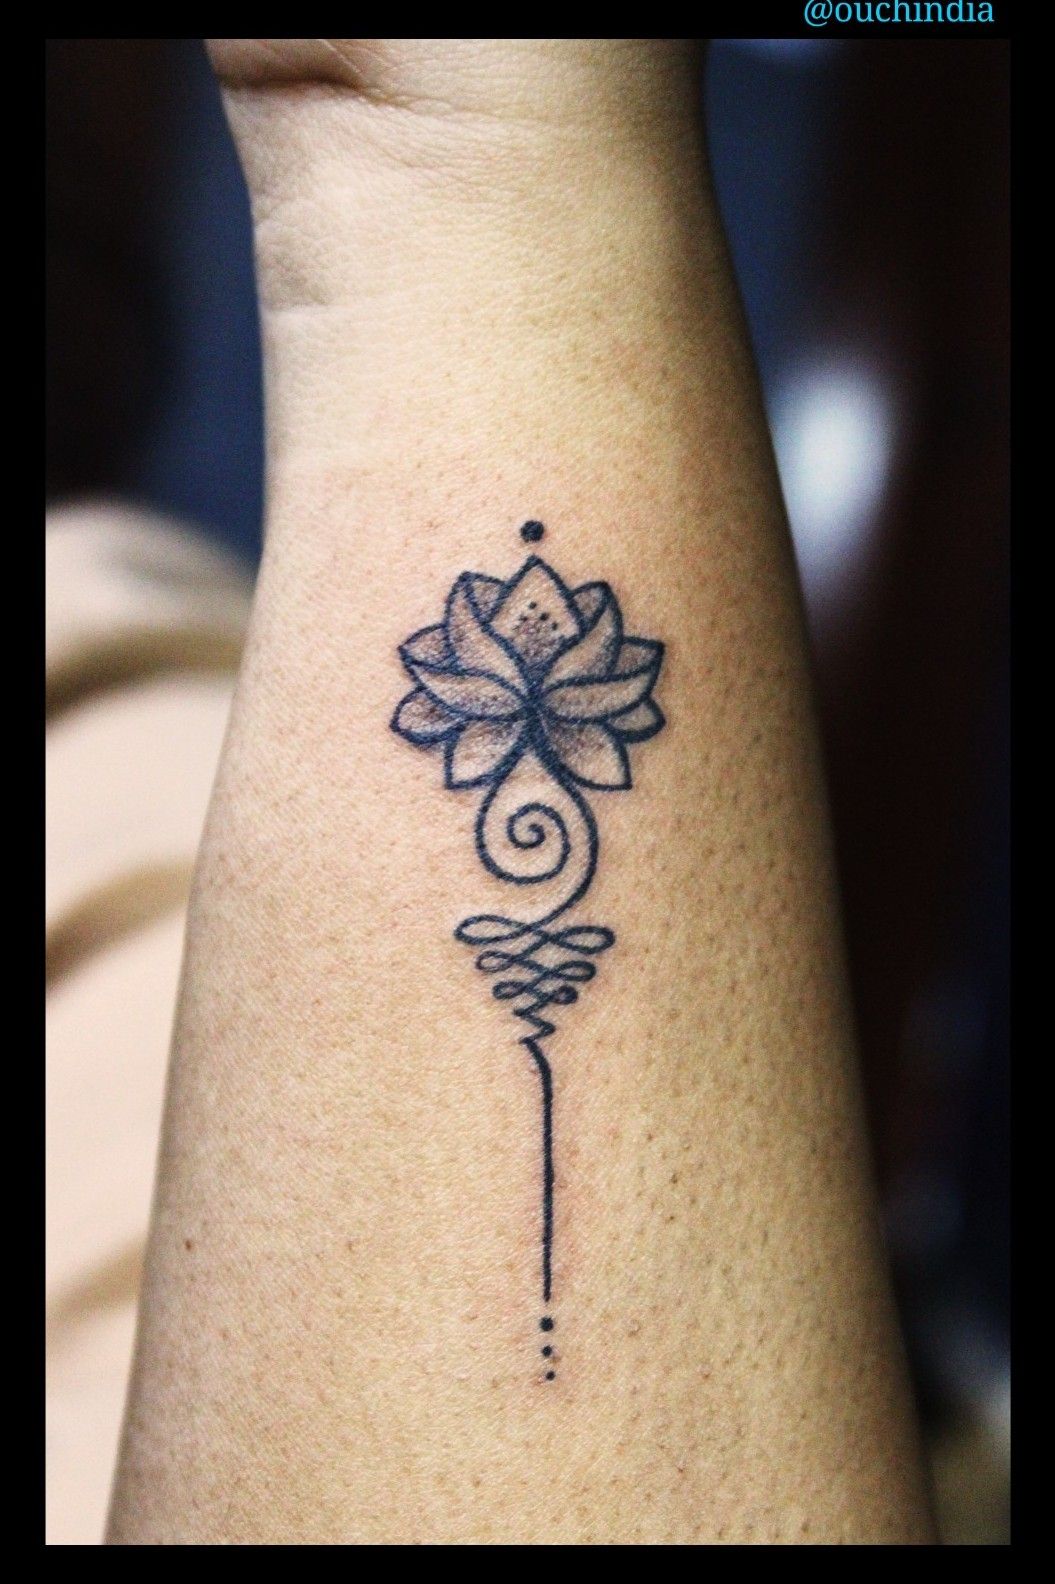 Zushan Ali - Tattoo Artist - OUCH Tattoos & Piercing | LinkedIn